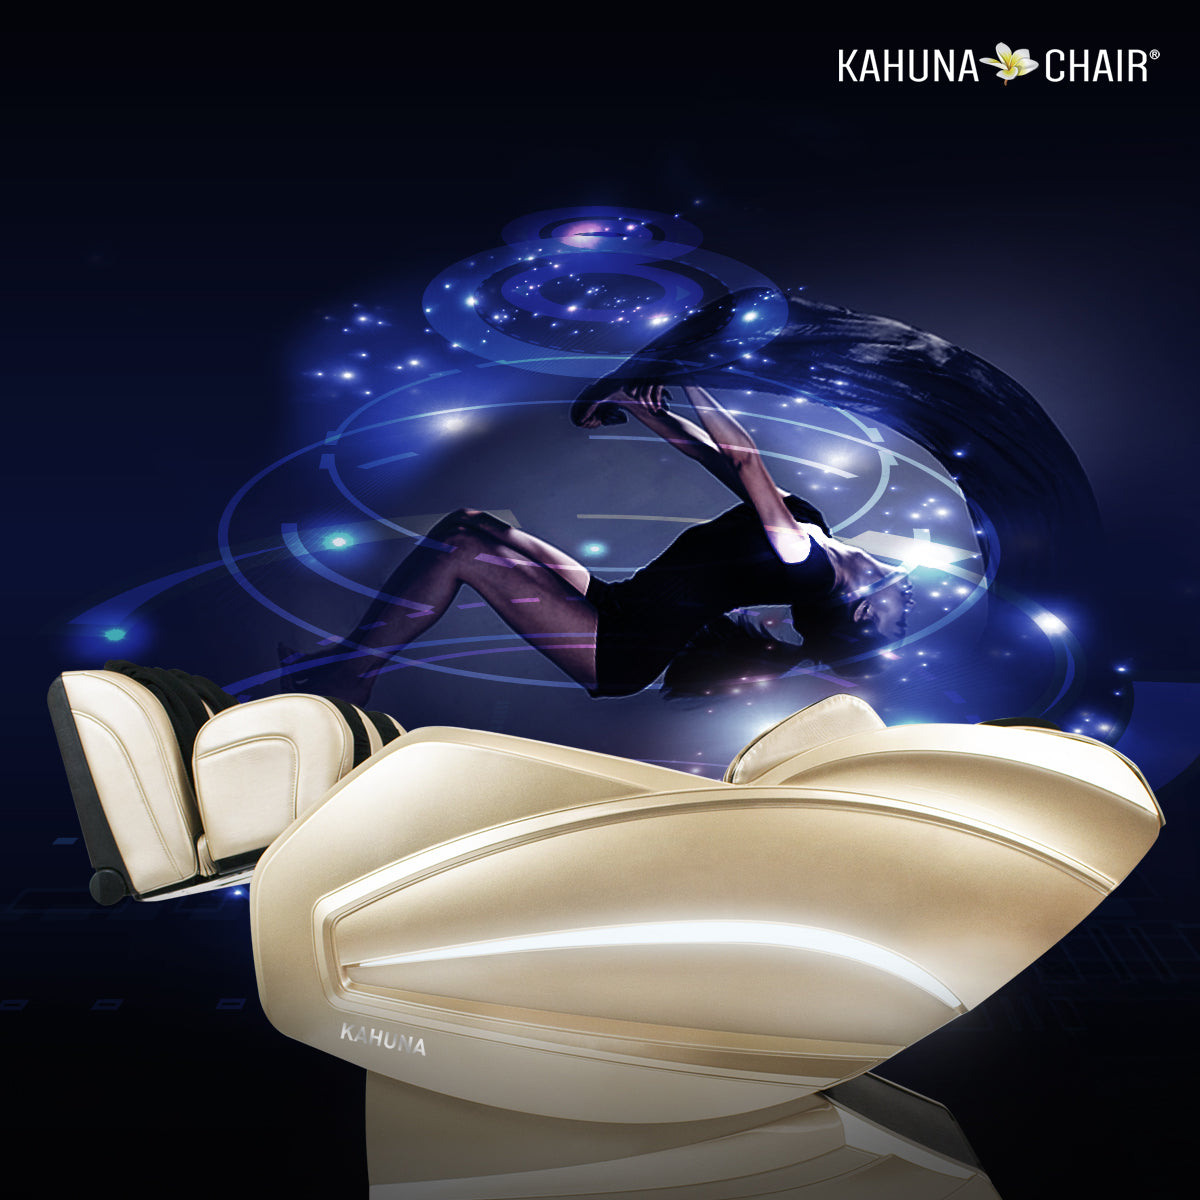 [OPEN BOX, A+] 4D Exquisite Rhythmic HSL-Track Kahuna Massage Chair, HM-Kappa Brown